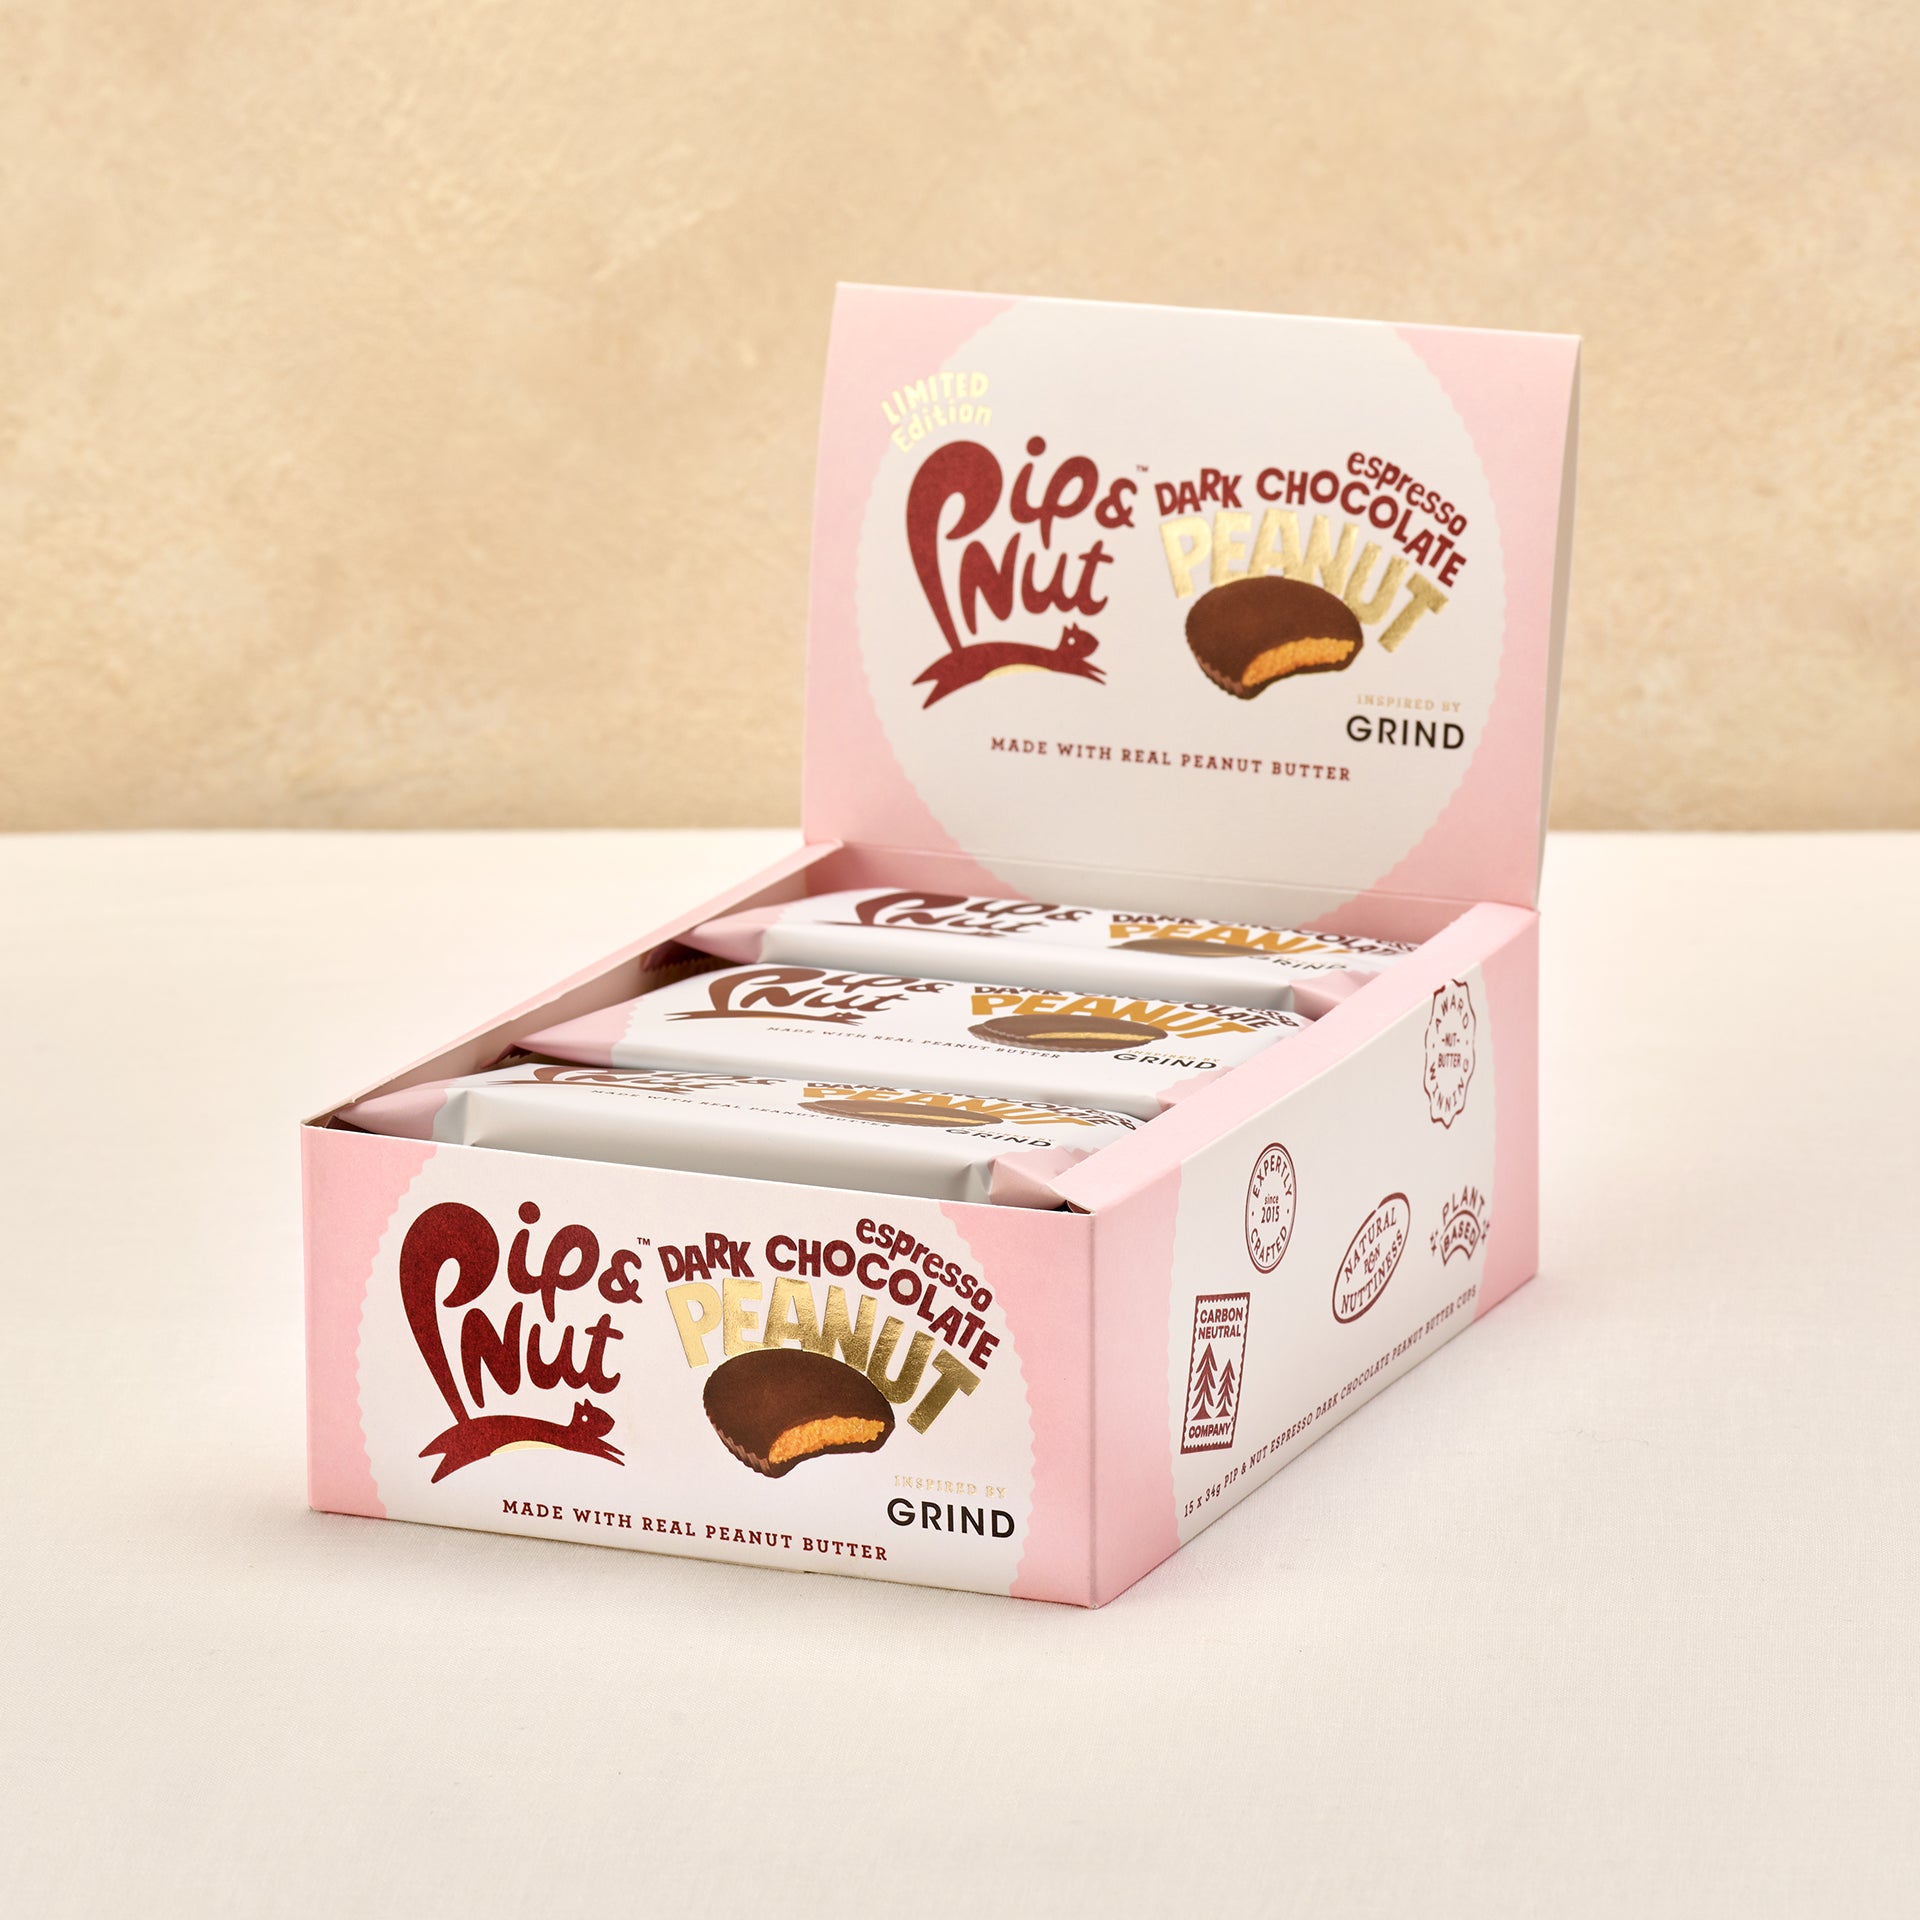 Pip & Nut Dark Chocolate Peanut Butter Cups 34g